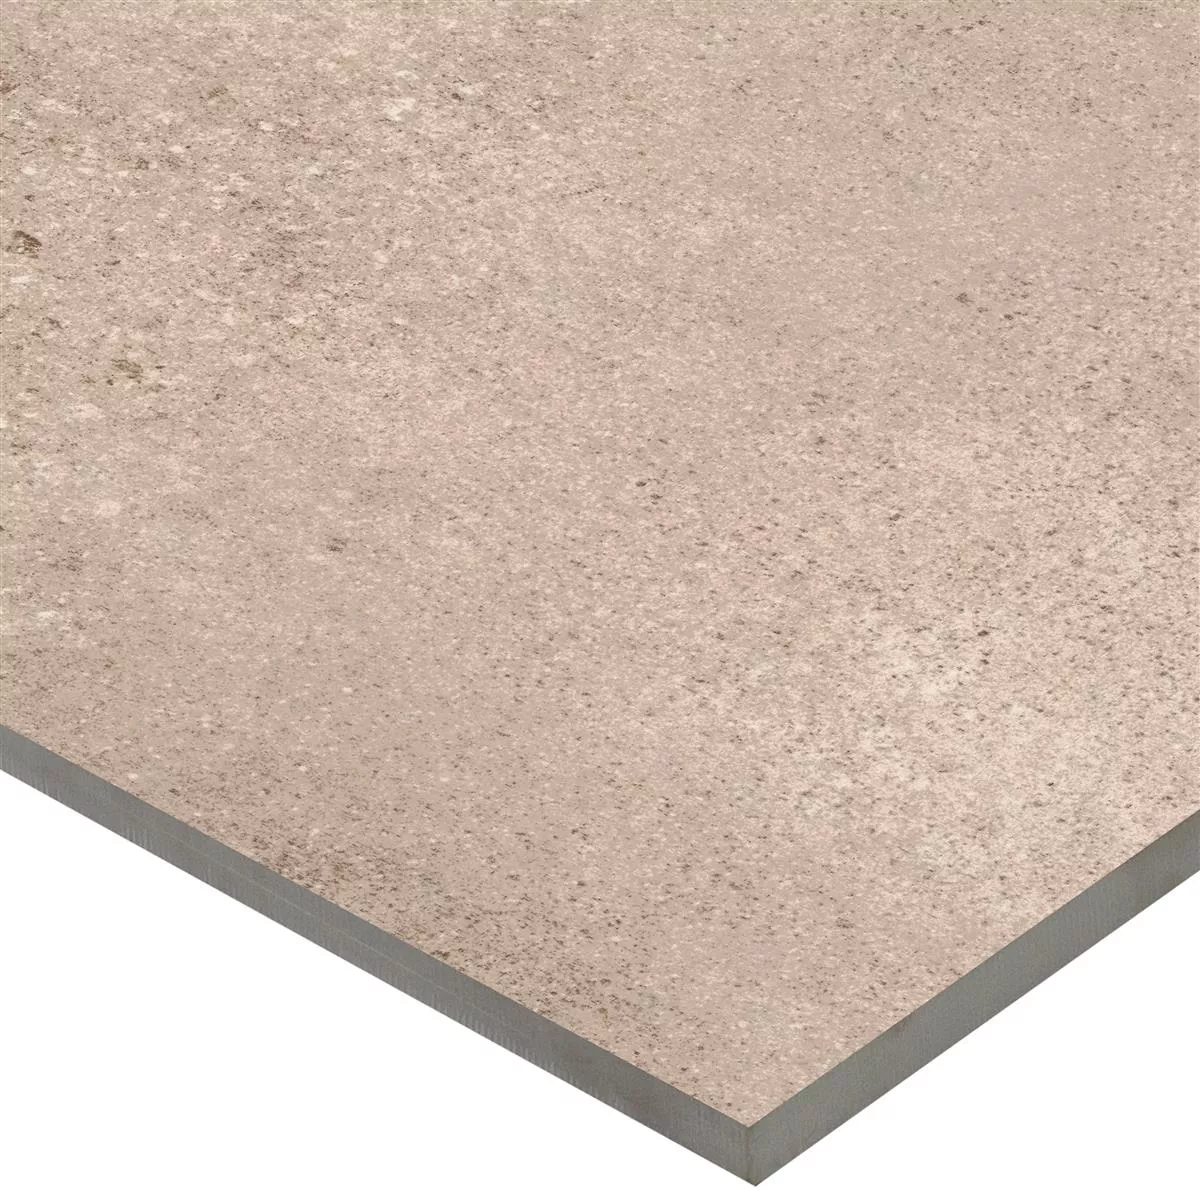 Sample Floor Tiles Stone Optic Riad Mat R9 Light Brown 30x60cm 